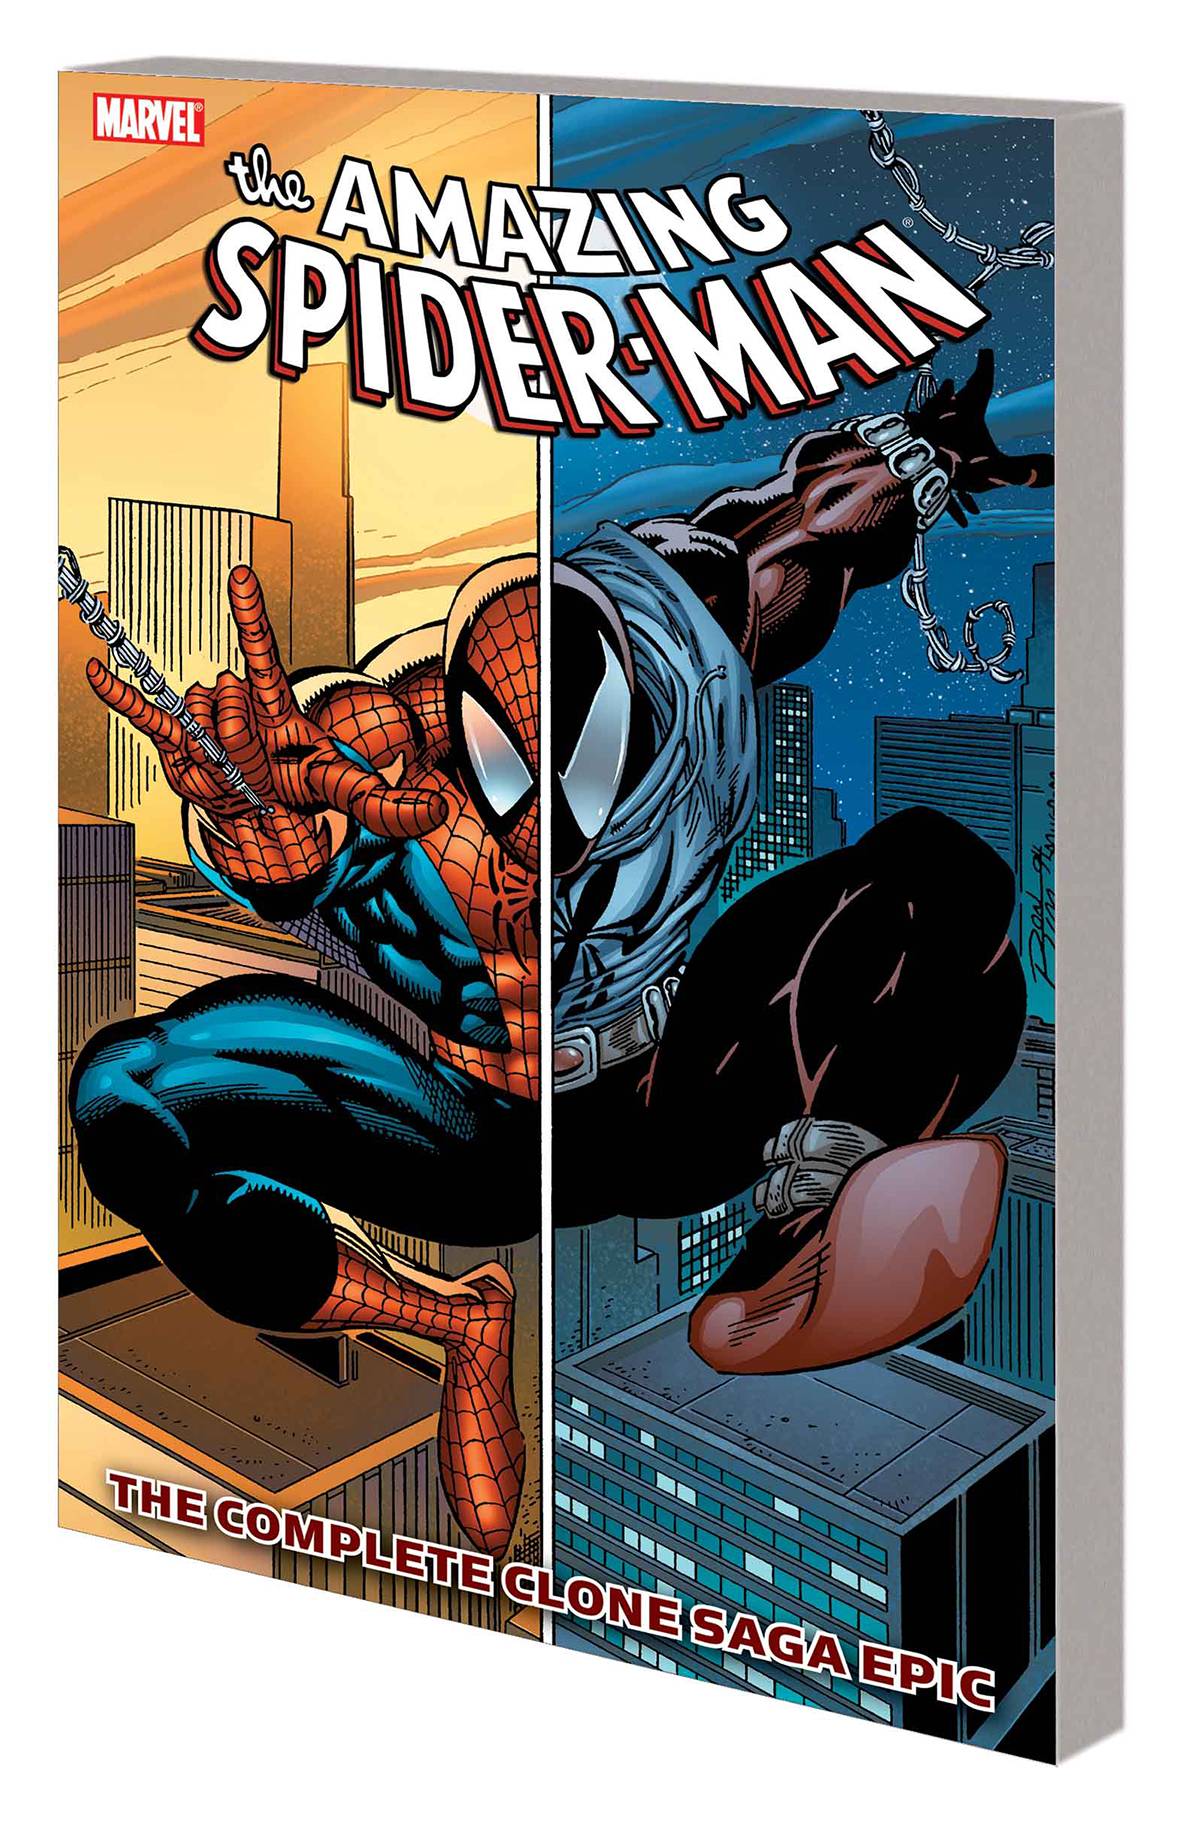 Marvel Saga: Amazing Spider-Man 1